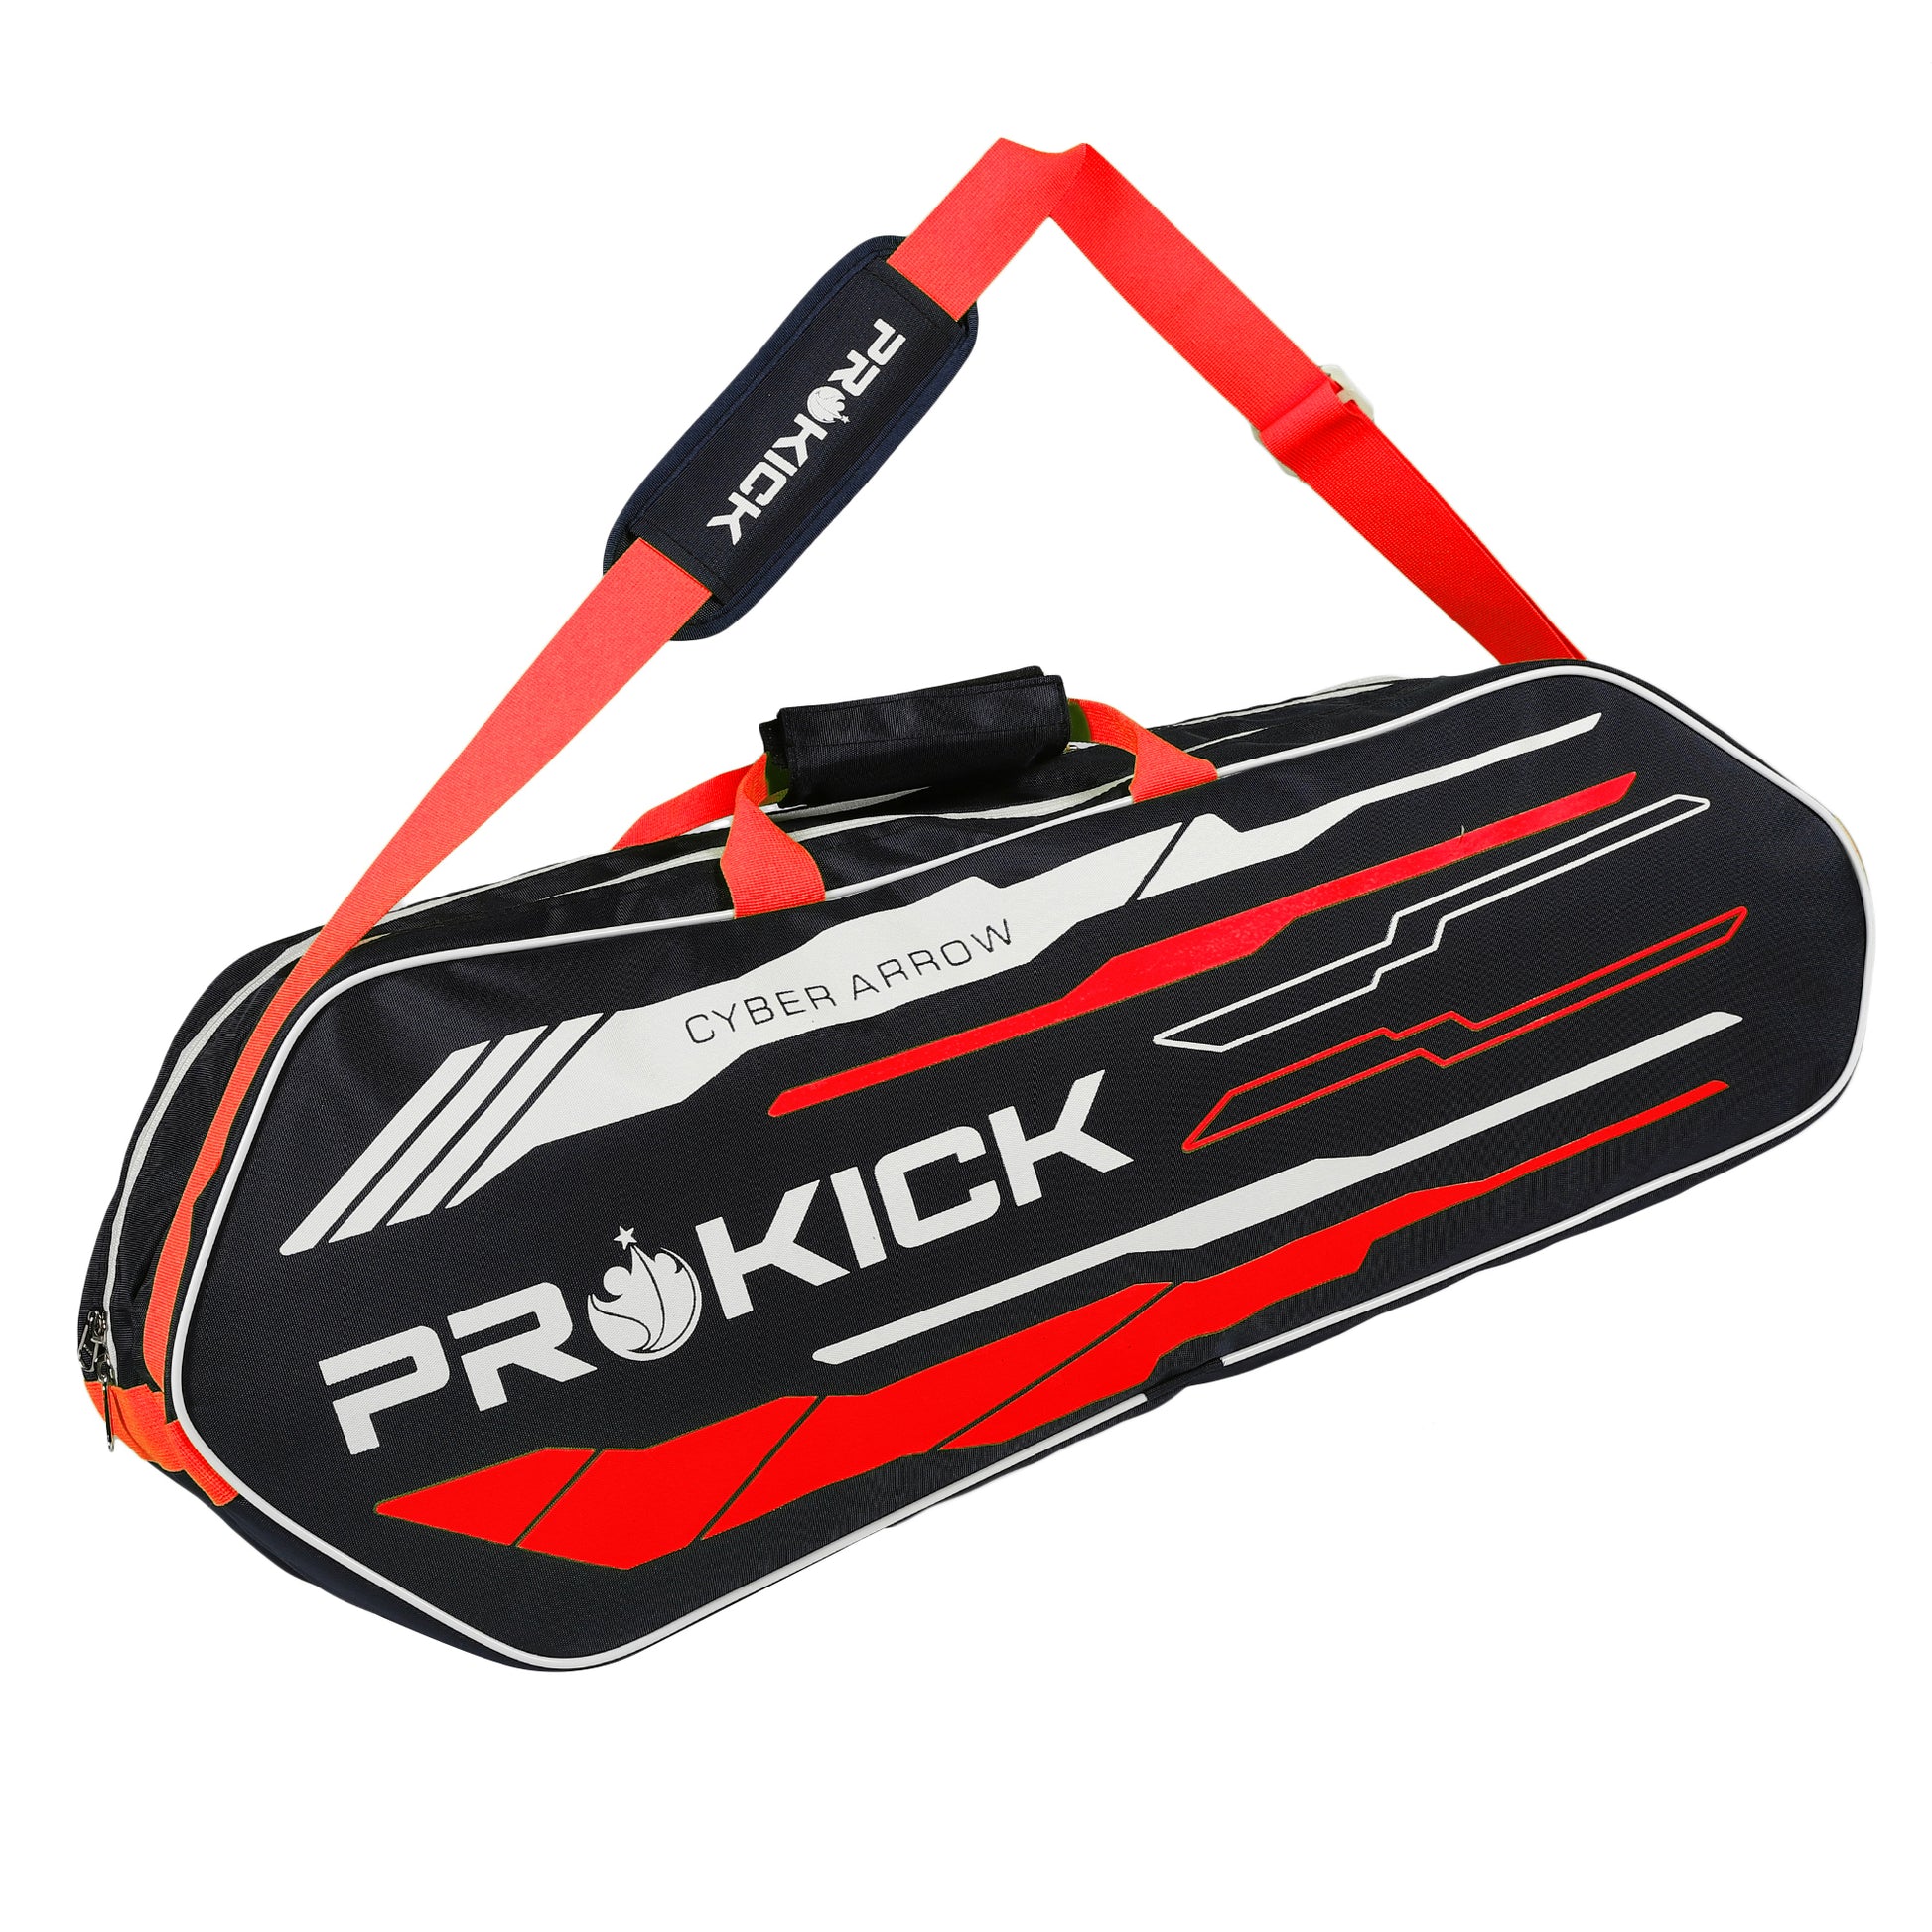 Prokick Cyber Arrow Badminton Kitbag with Free Shoe Bag - Best Price online Prokicksports.com